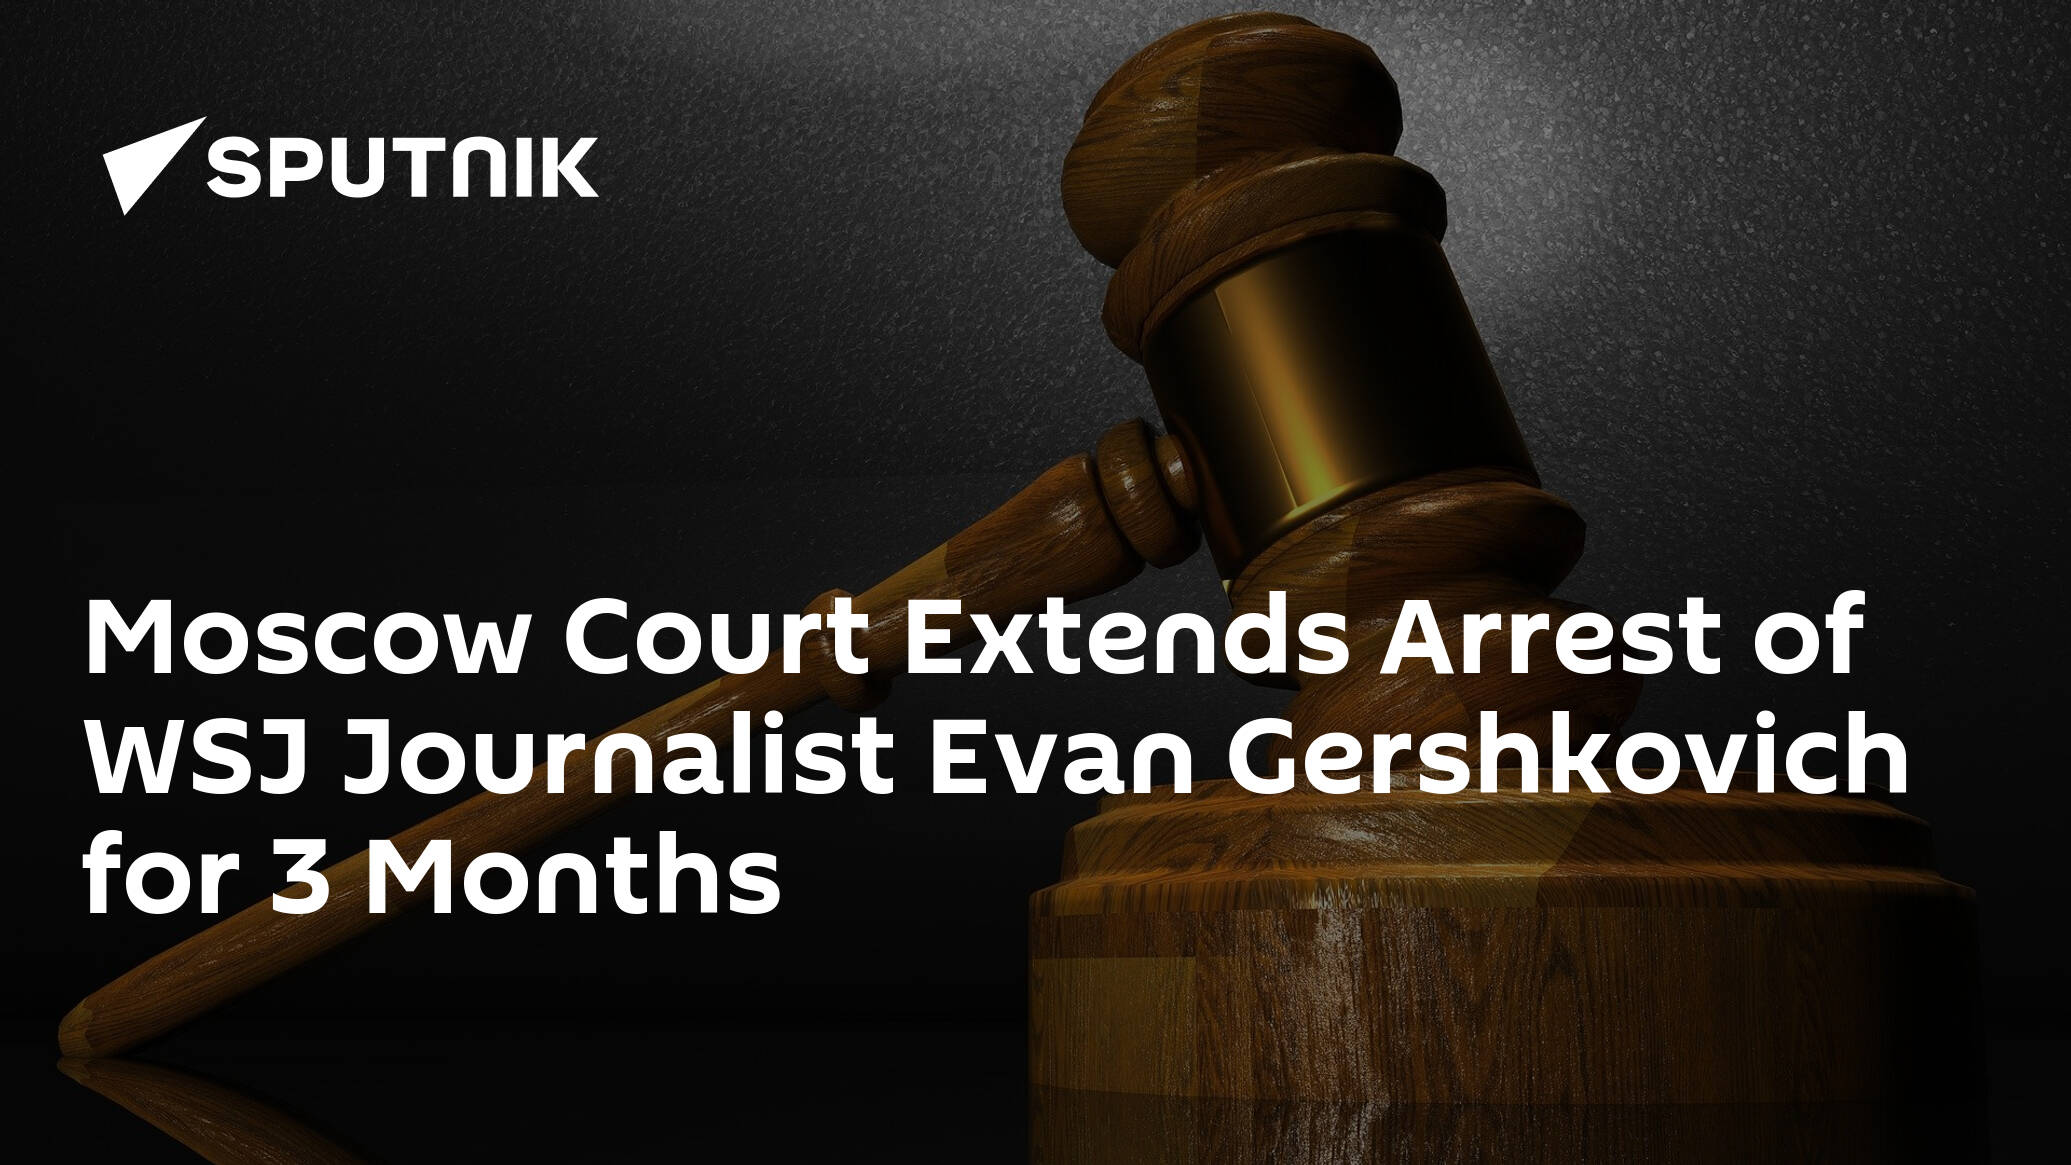 Moscow Court Extends Arrest of WSJ Journalist Evan Gershkovich for 3 Months